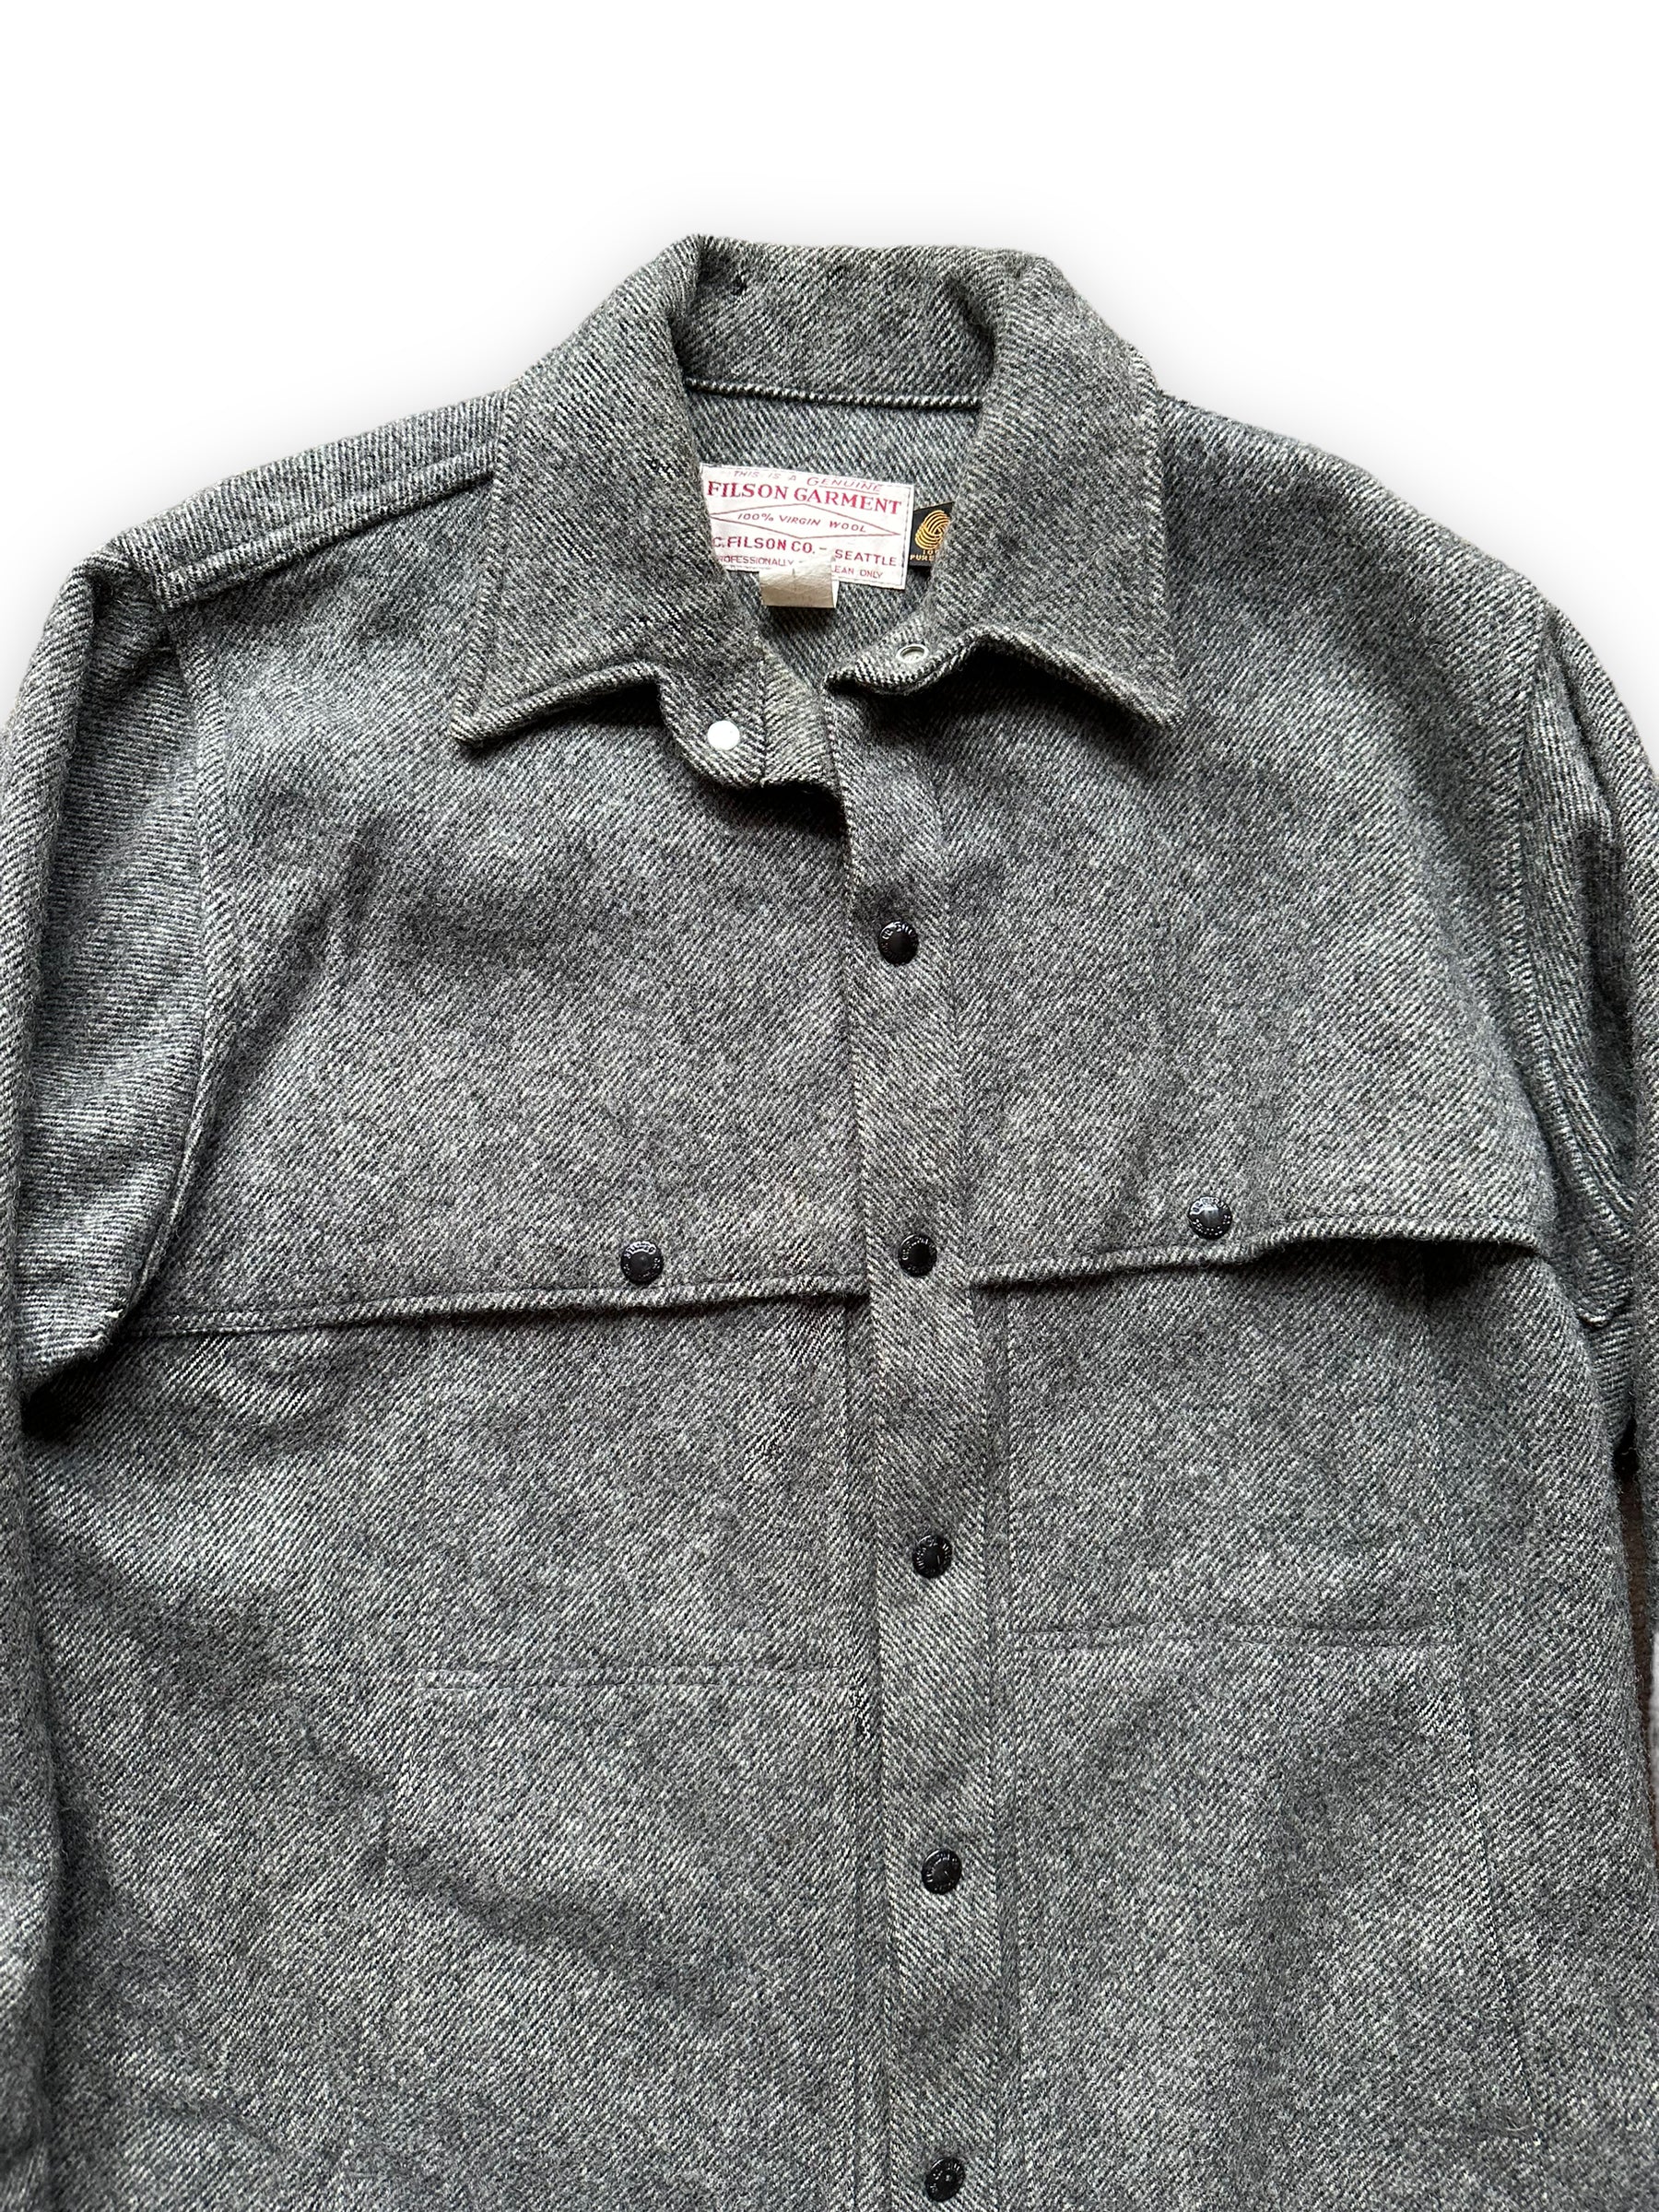 Upper Front Detail on Vintage Filson Grey Herringbone Cape Coat SZ Large  |  Barn Owl Vintage Goods | Vintage Wool Workwear Seattle